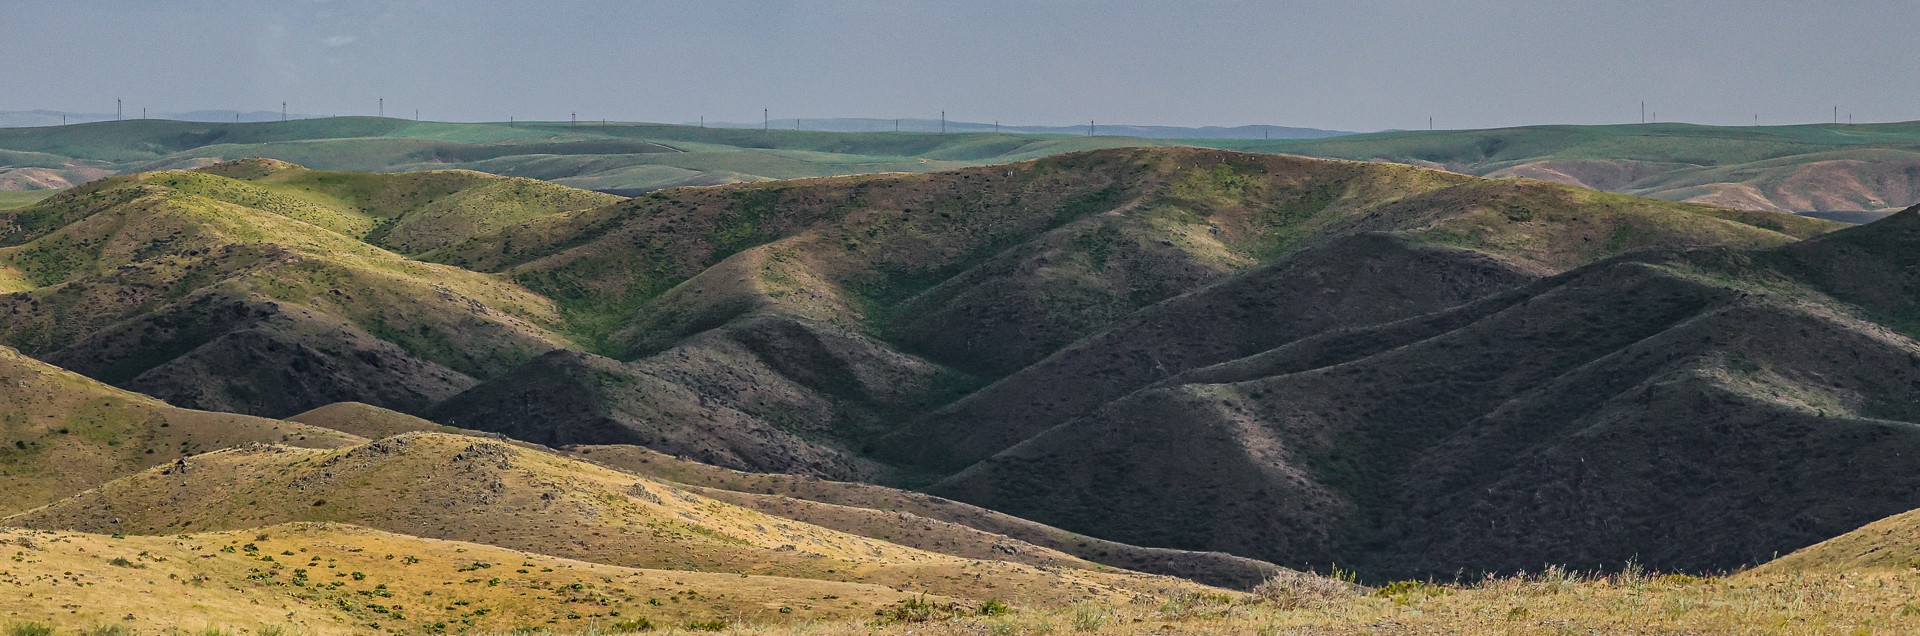 Kasachstan – Landscape